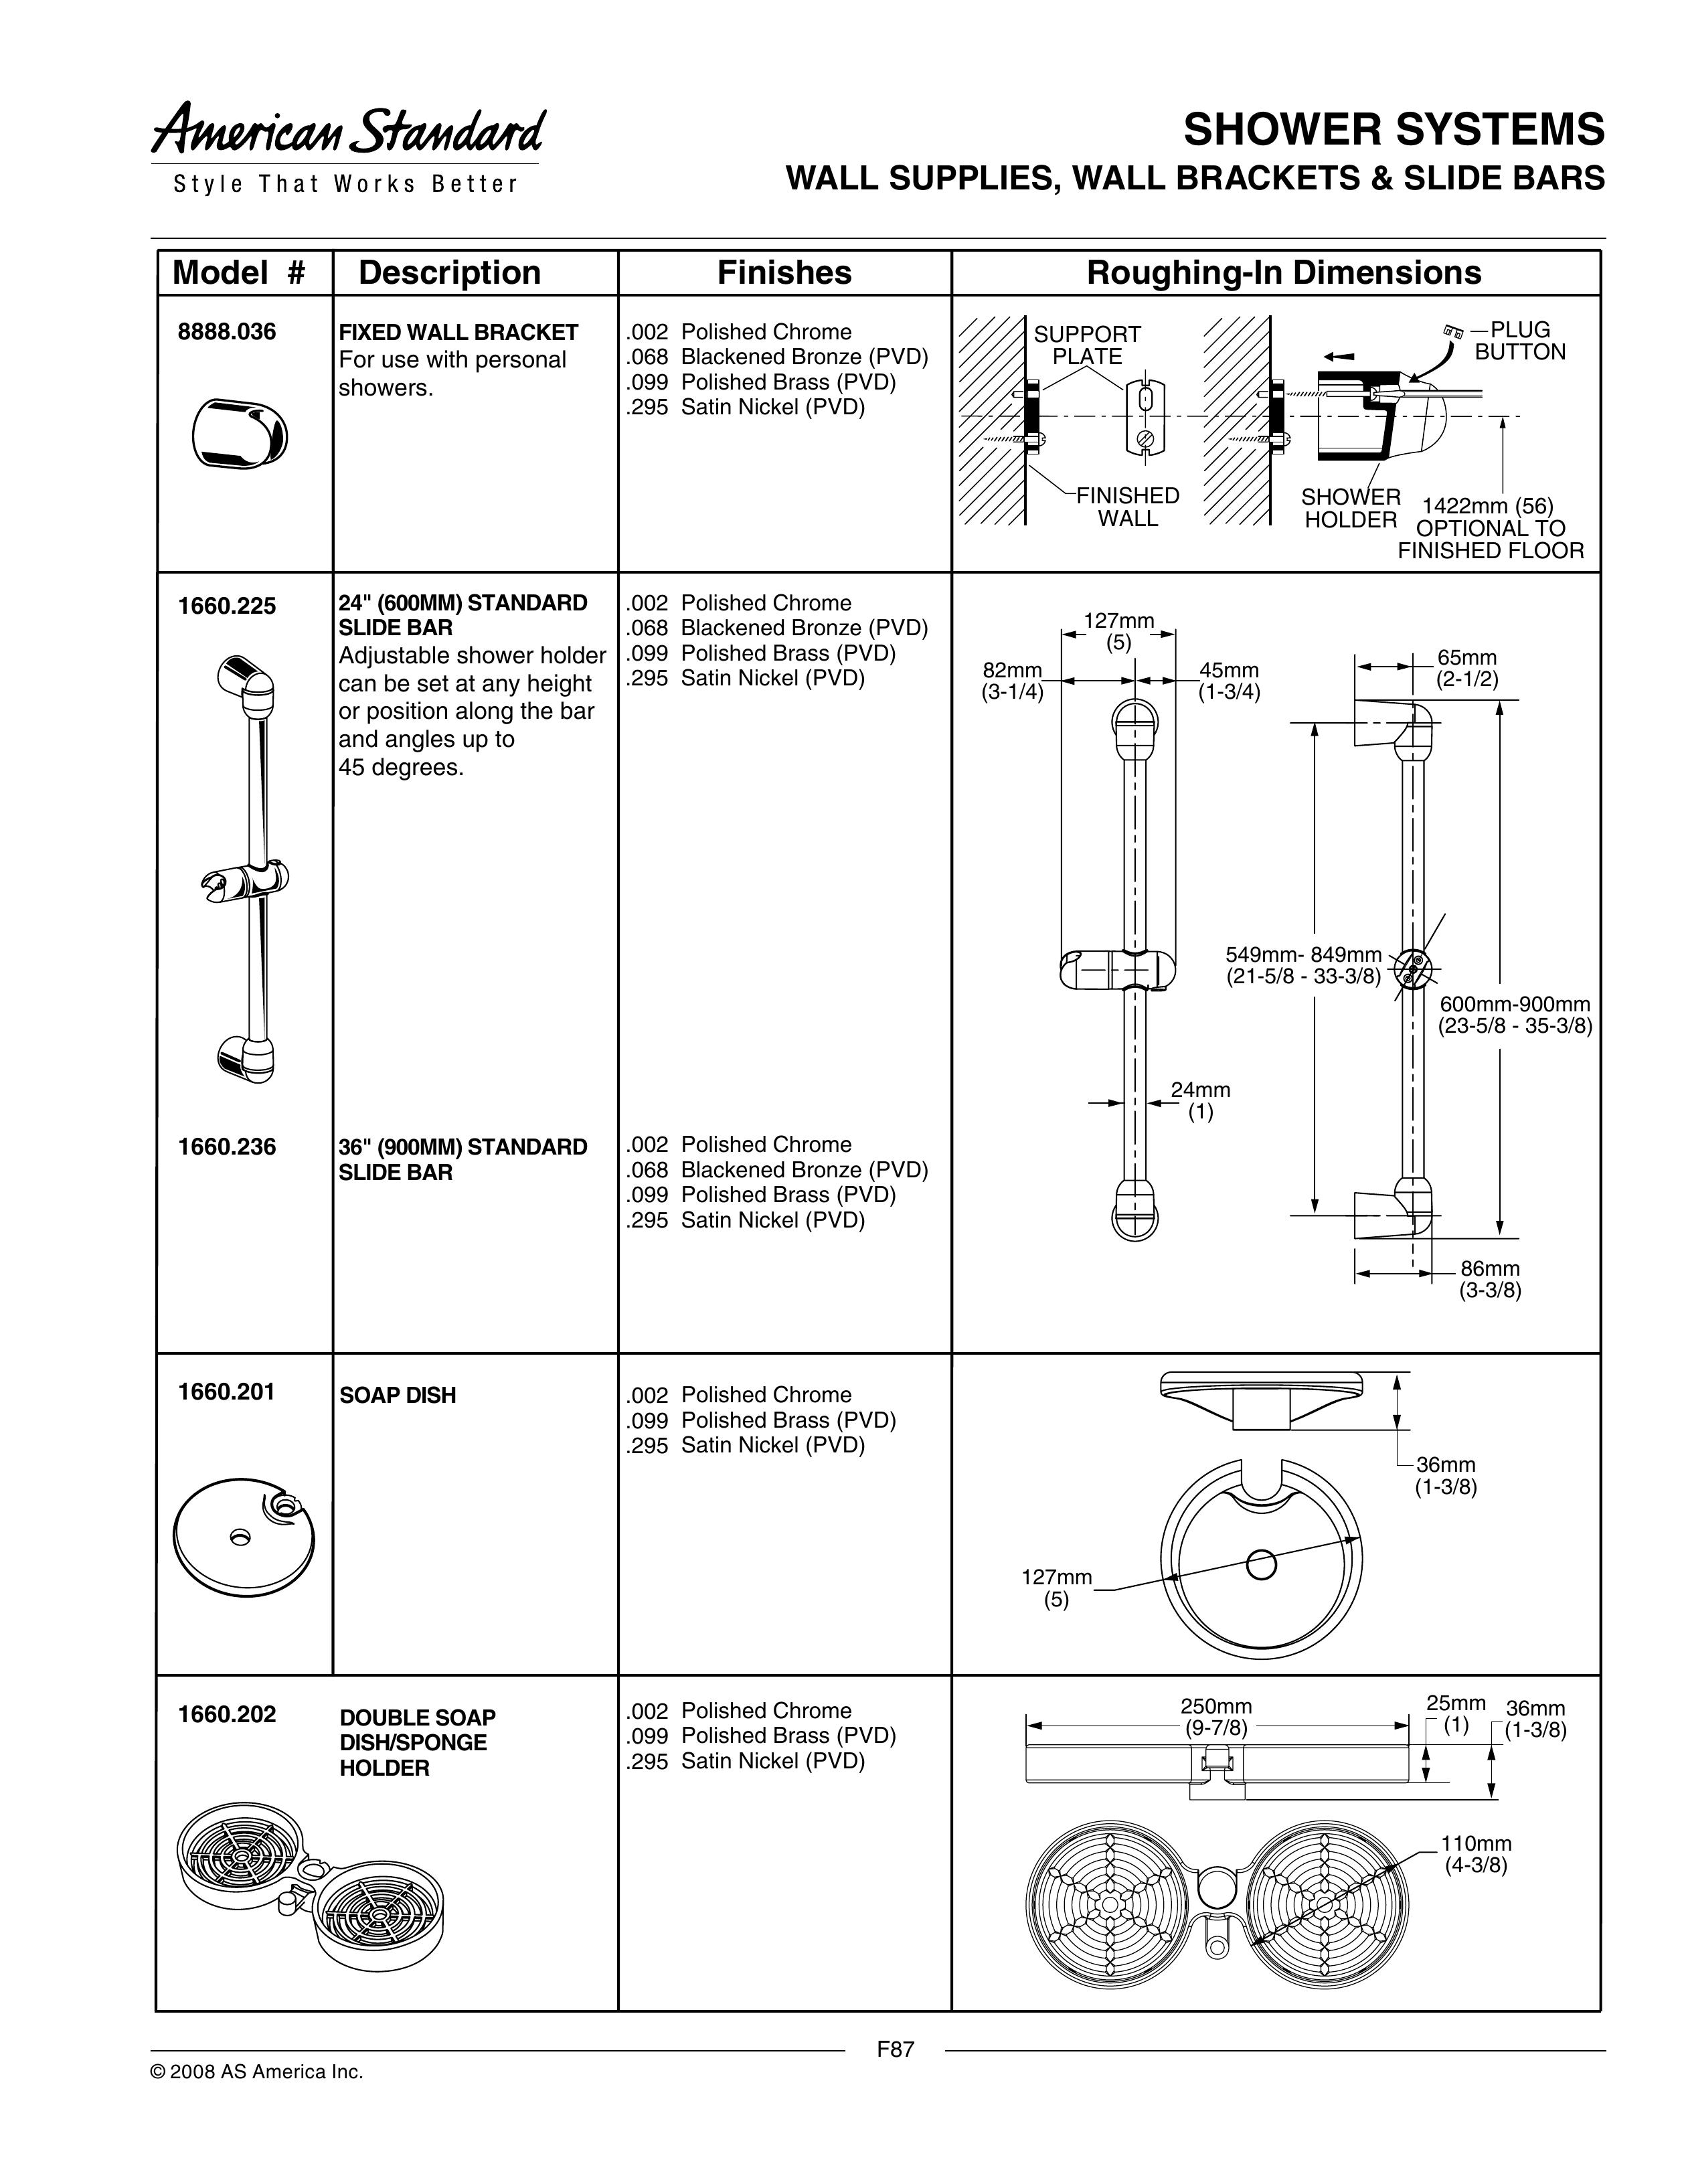 American Standard 1660.202 Outdoor Shower User Manual